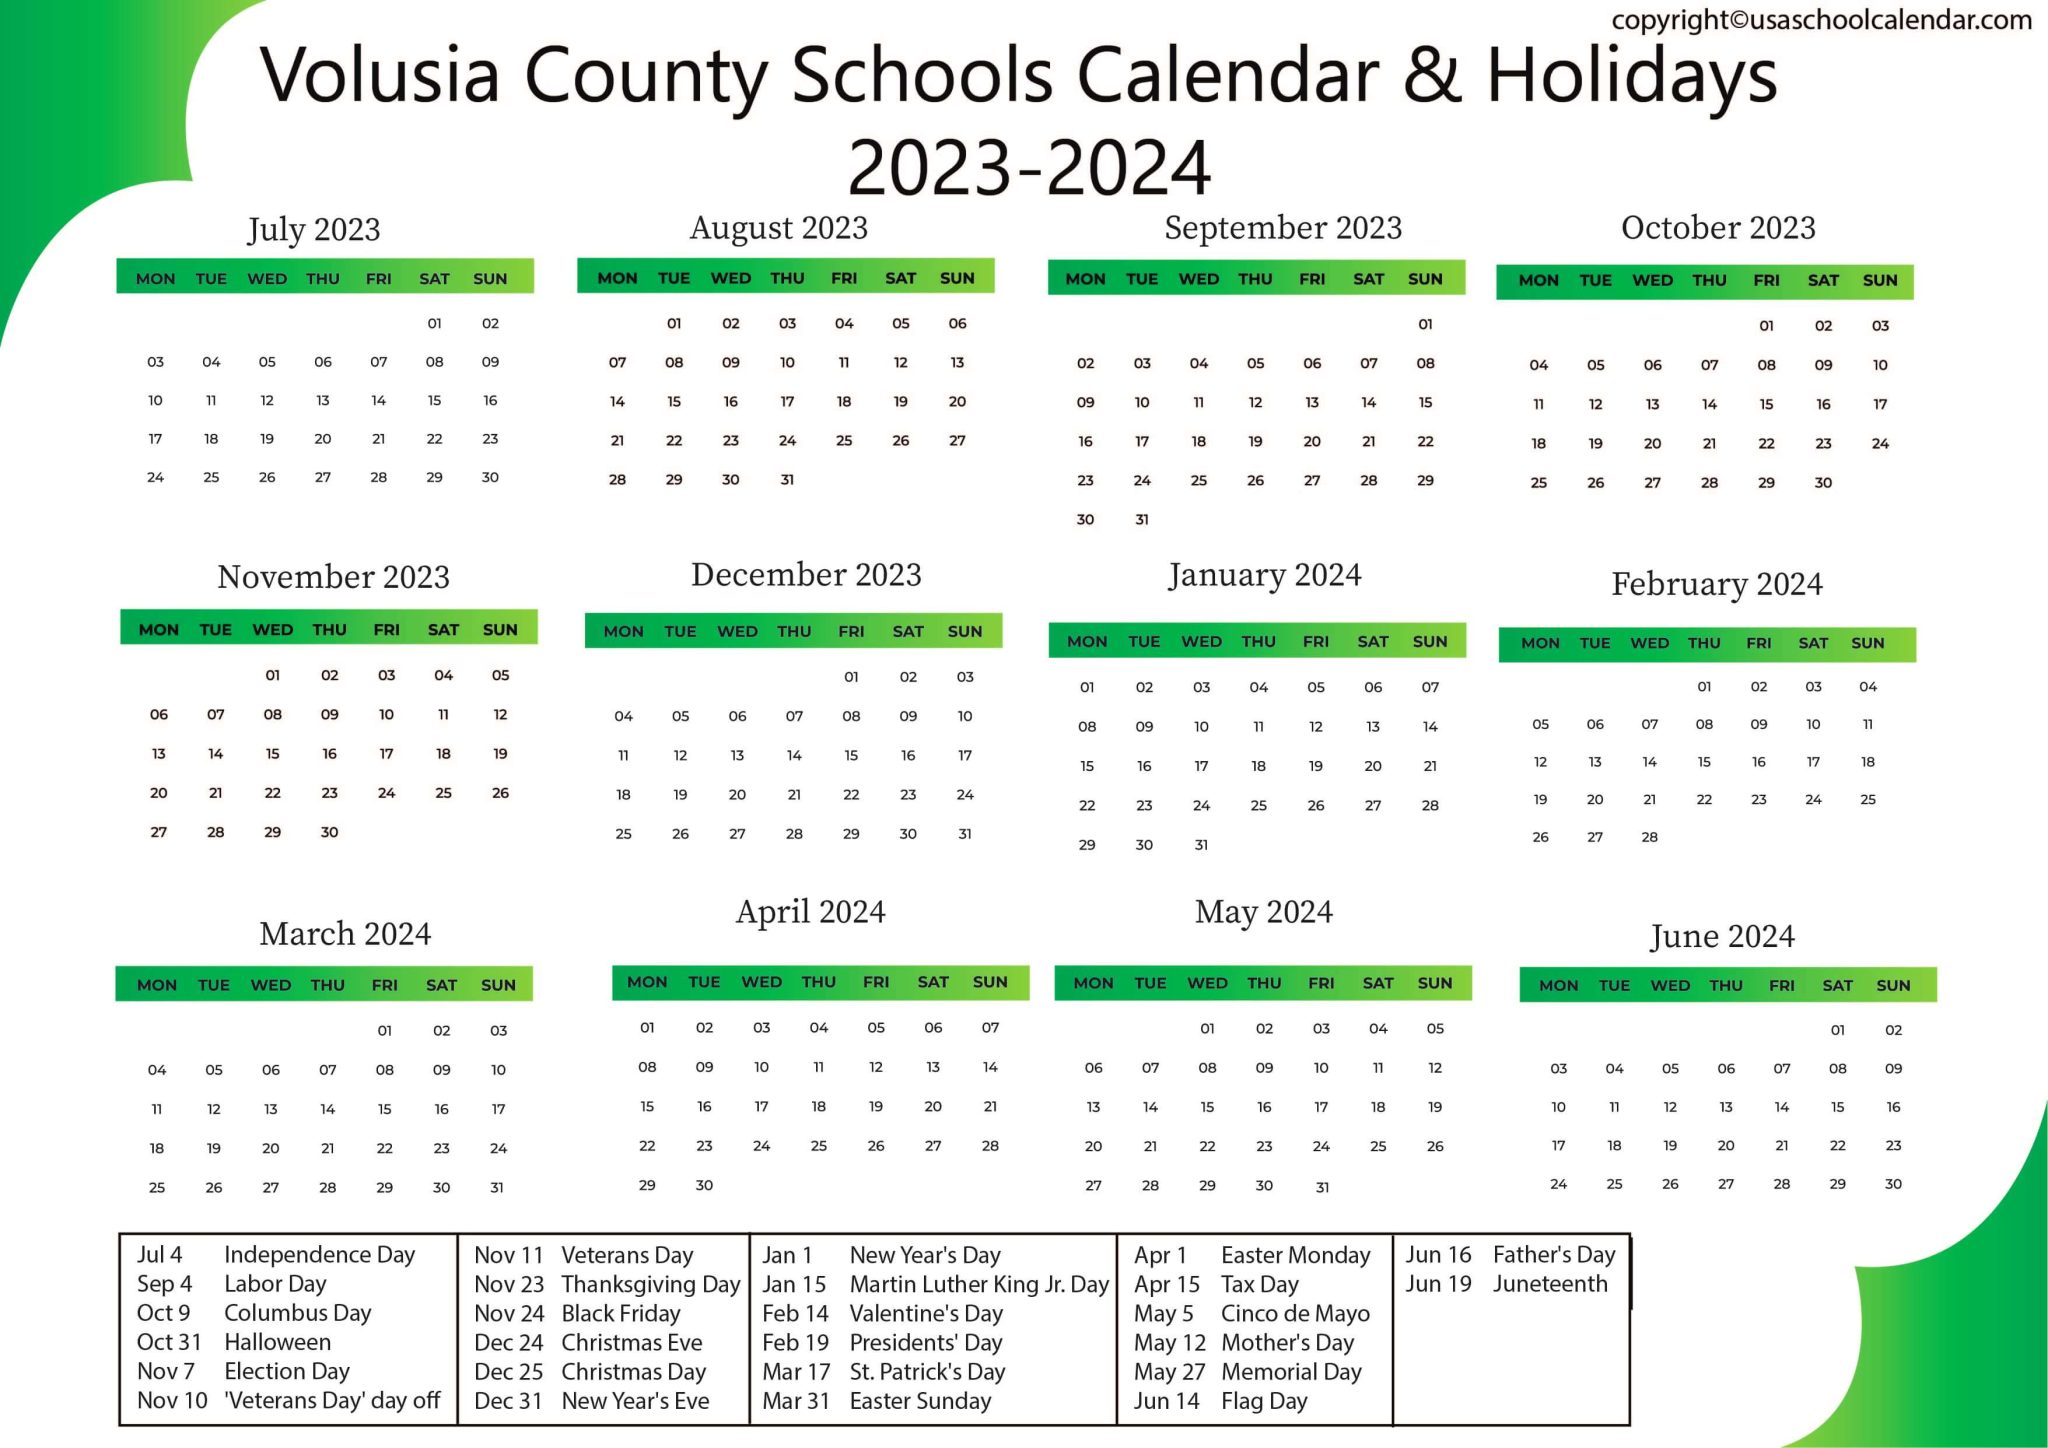 Volusia County Schools Calendar & Holidays 2023-2024